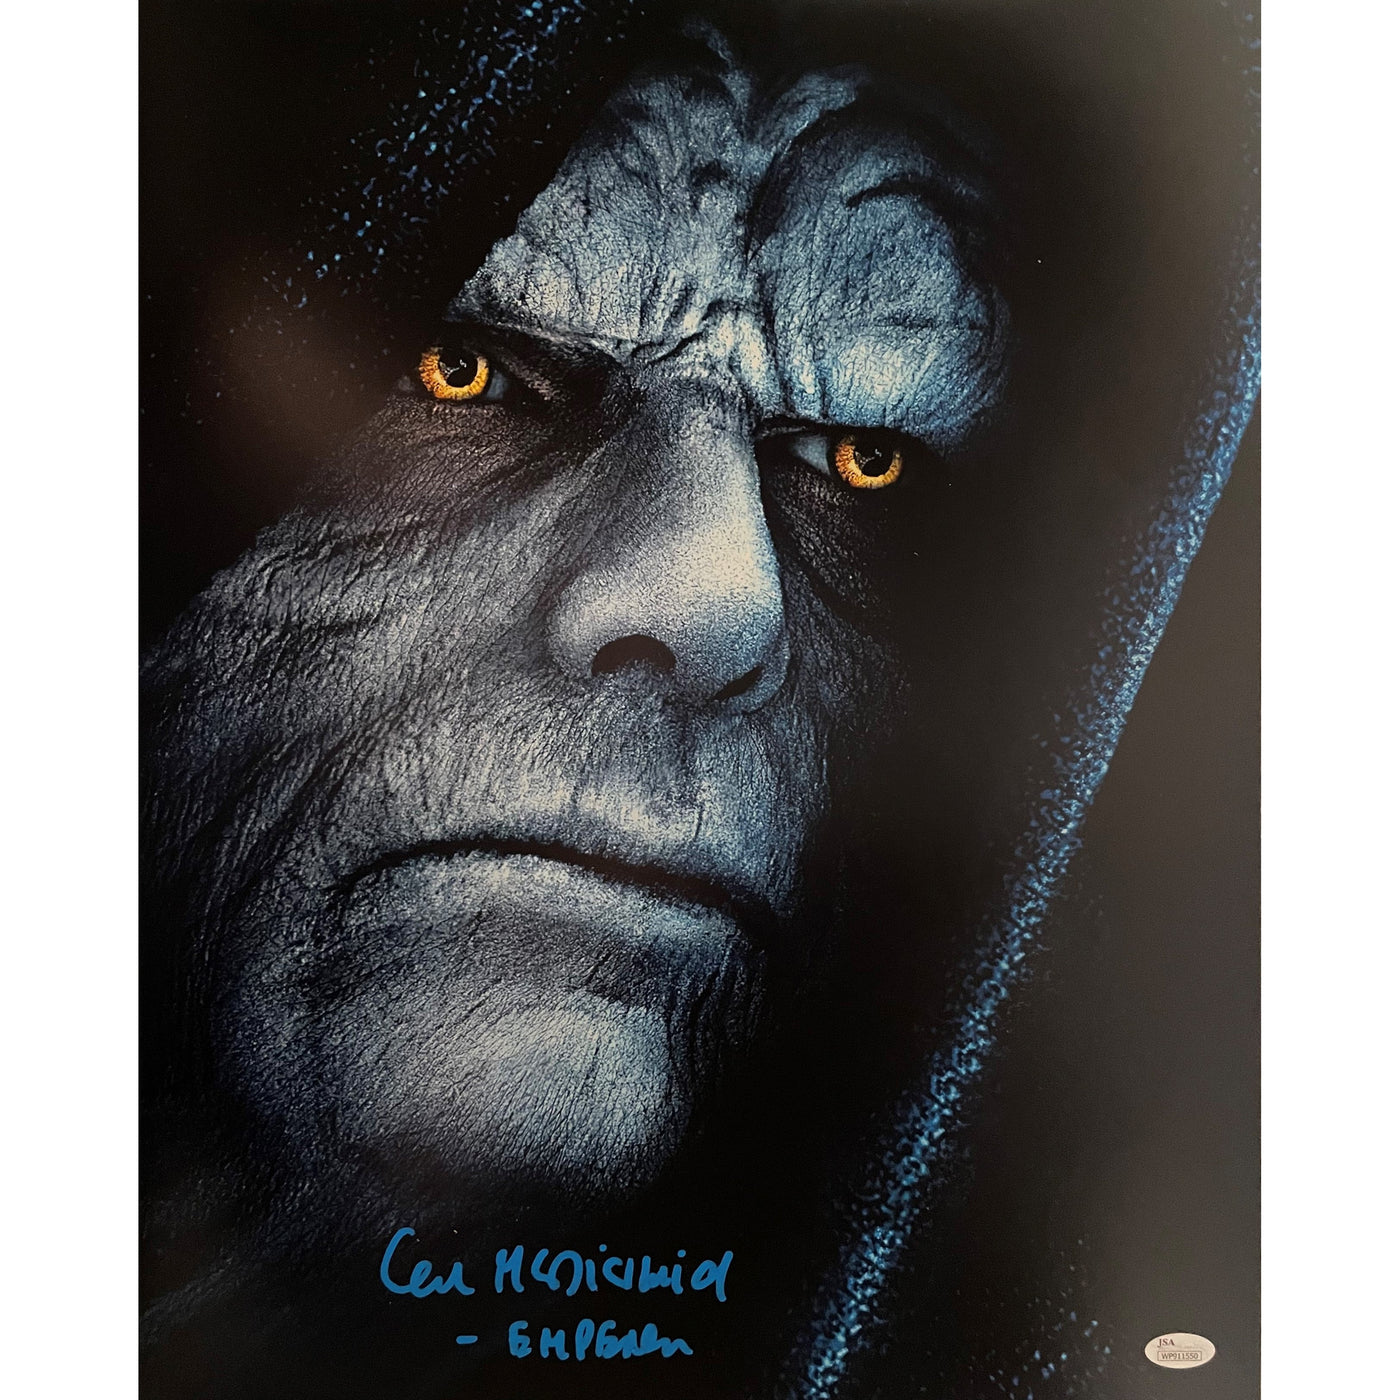 Ian Mcdiarmid Signed 16x20 Photo Star Wars Emperor Autographed JSA COA 4